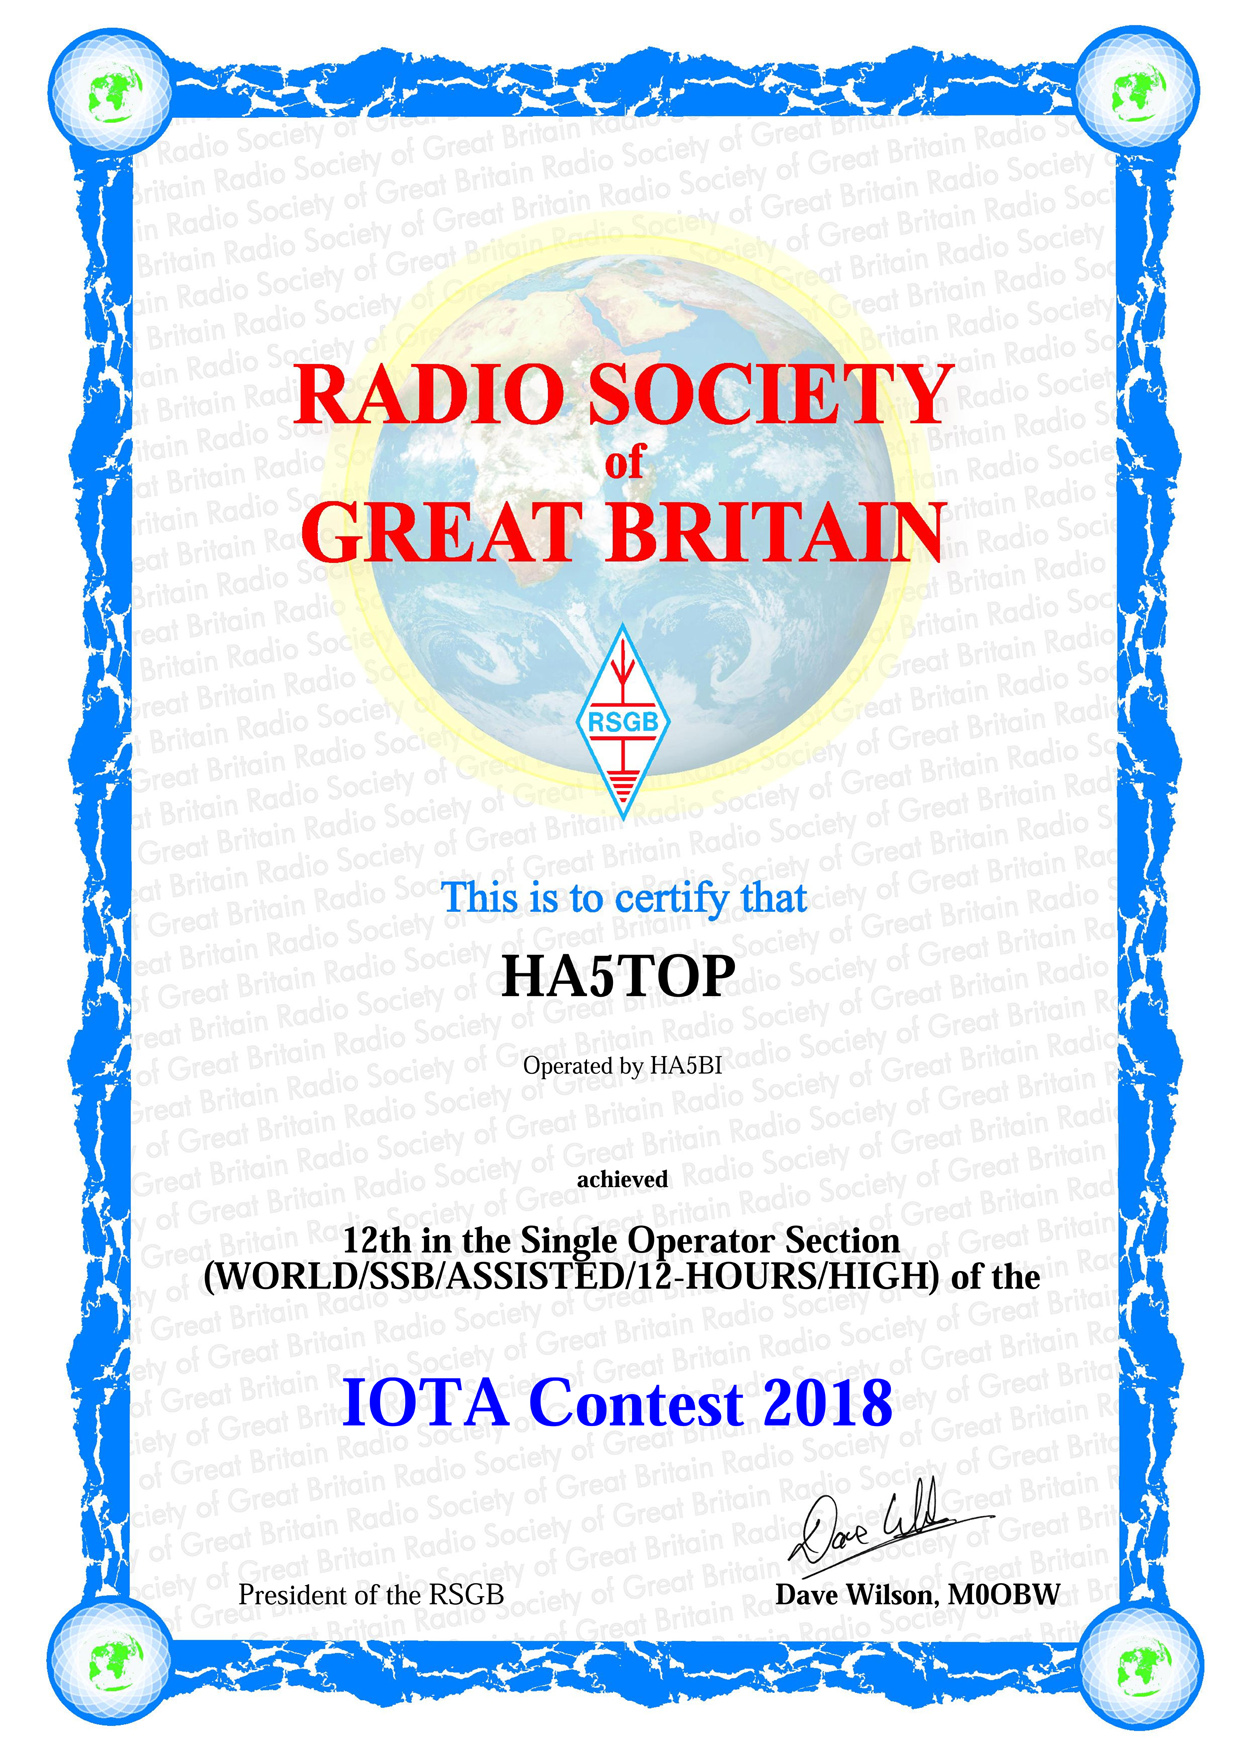 RSGB IOTA Contest 2018